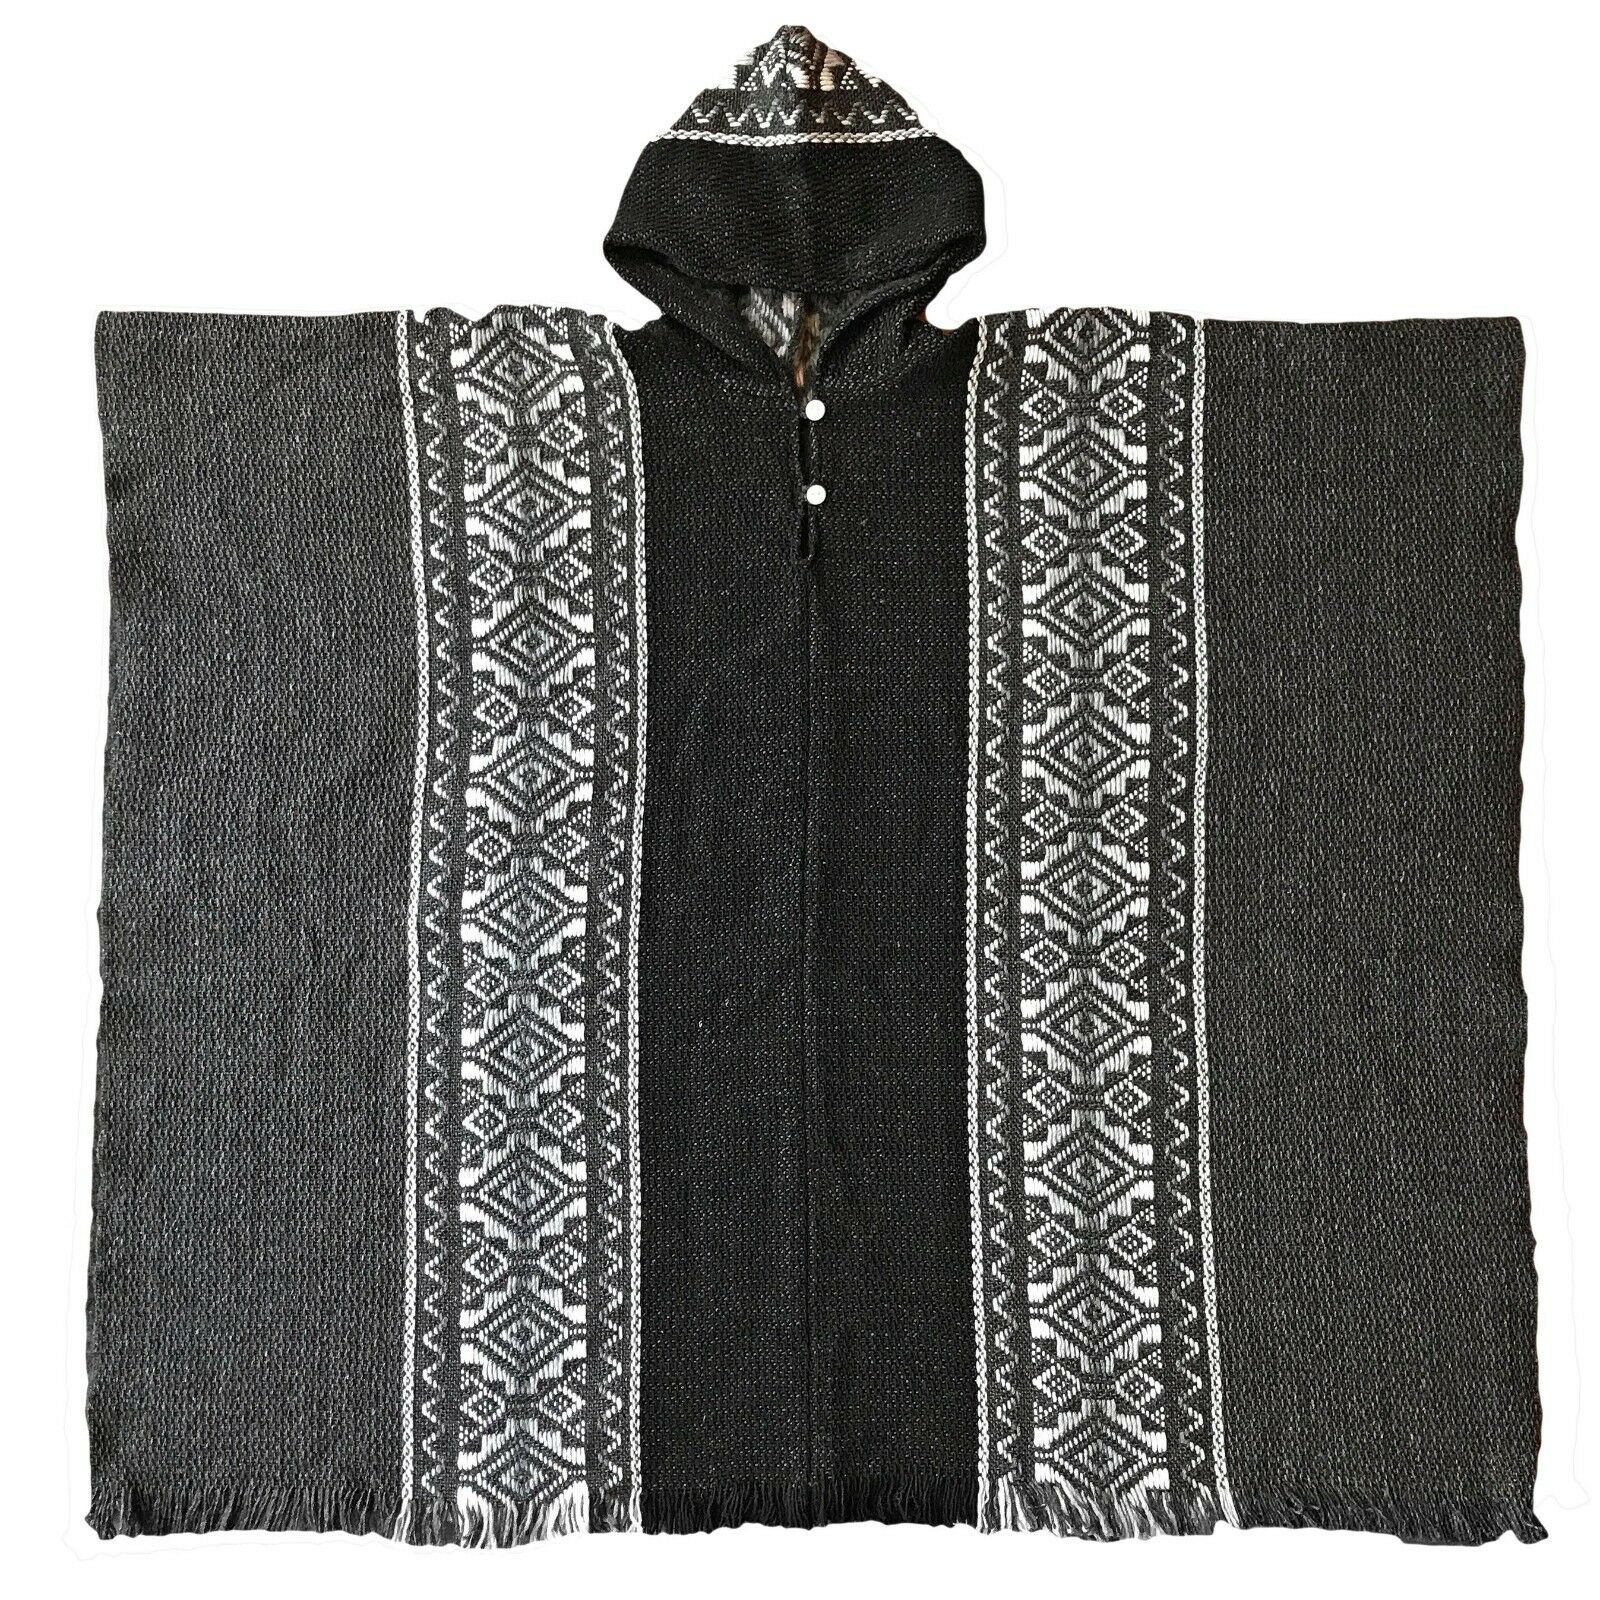 Llama Wool Unisex South American Handwoven Hooded Poncho - black/dark gray with diamonds pattern